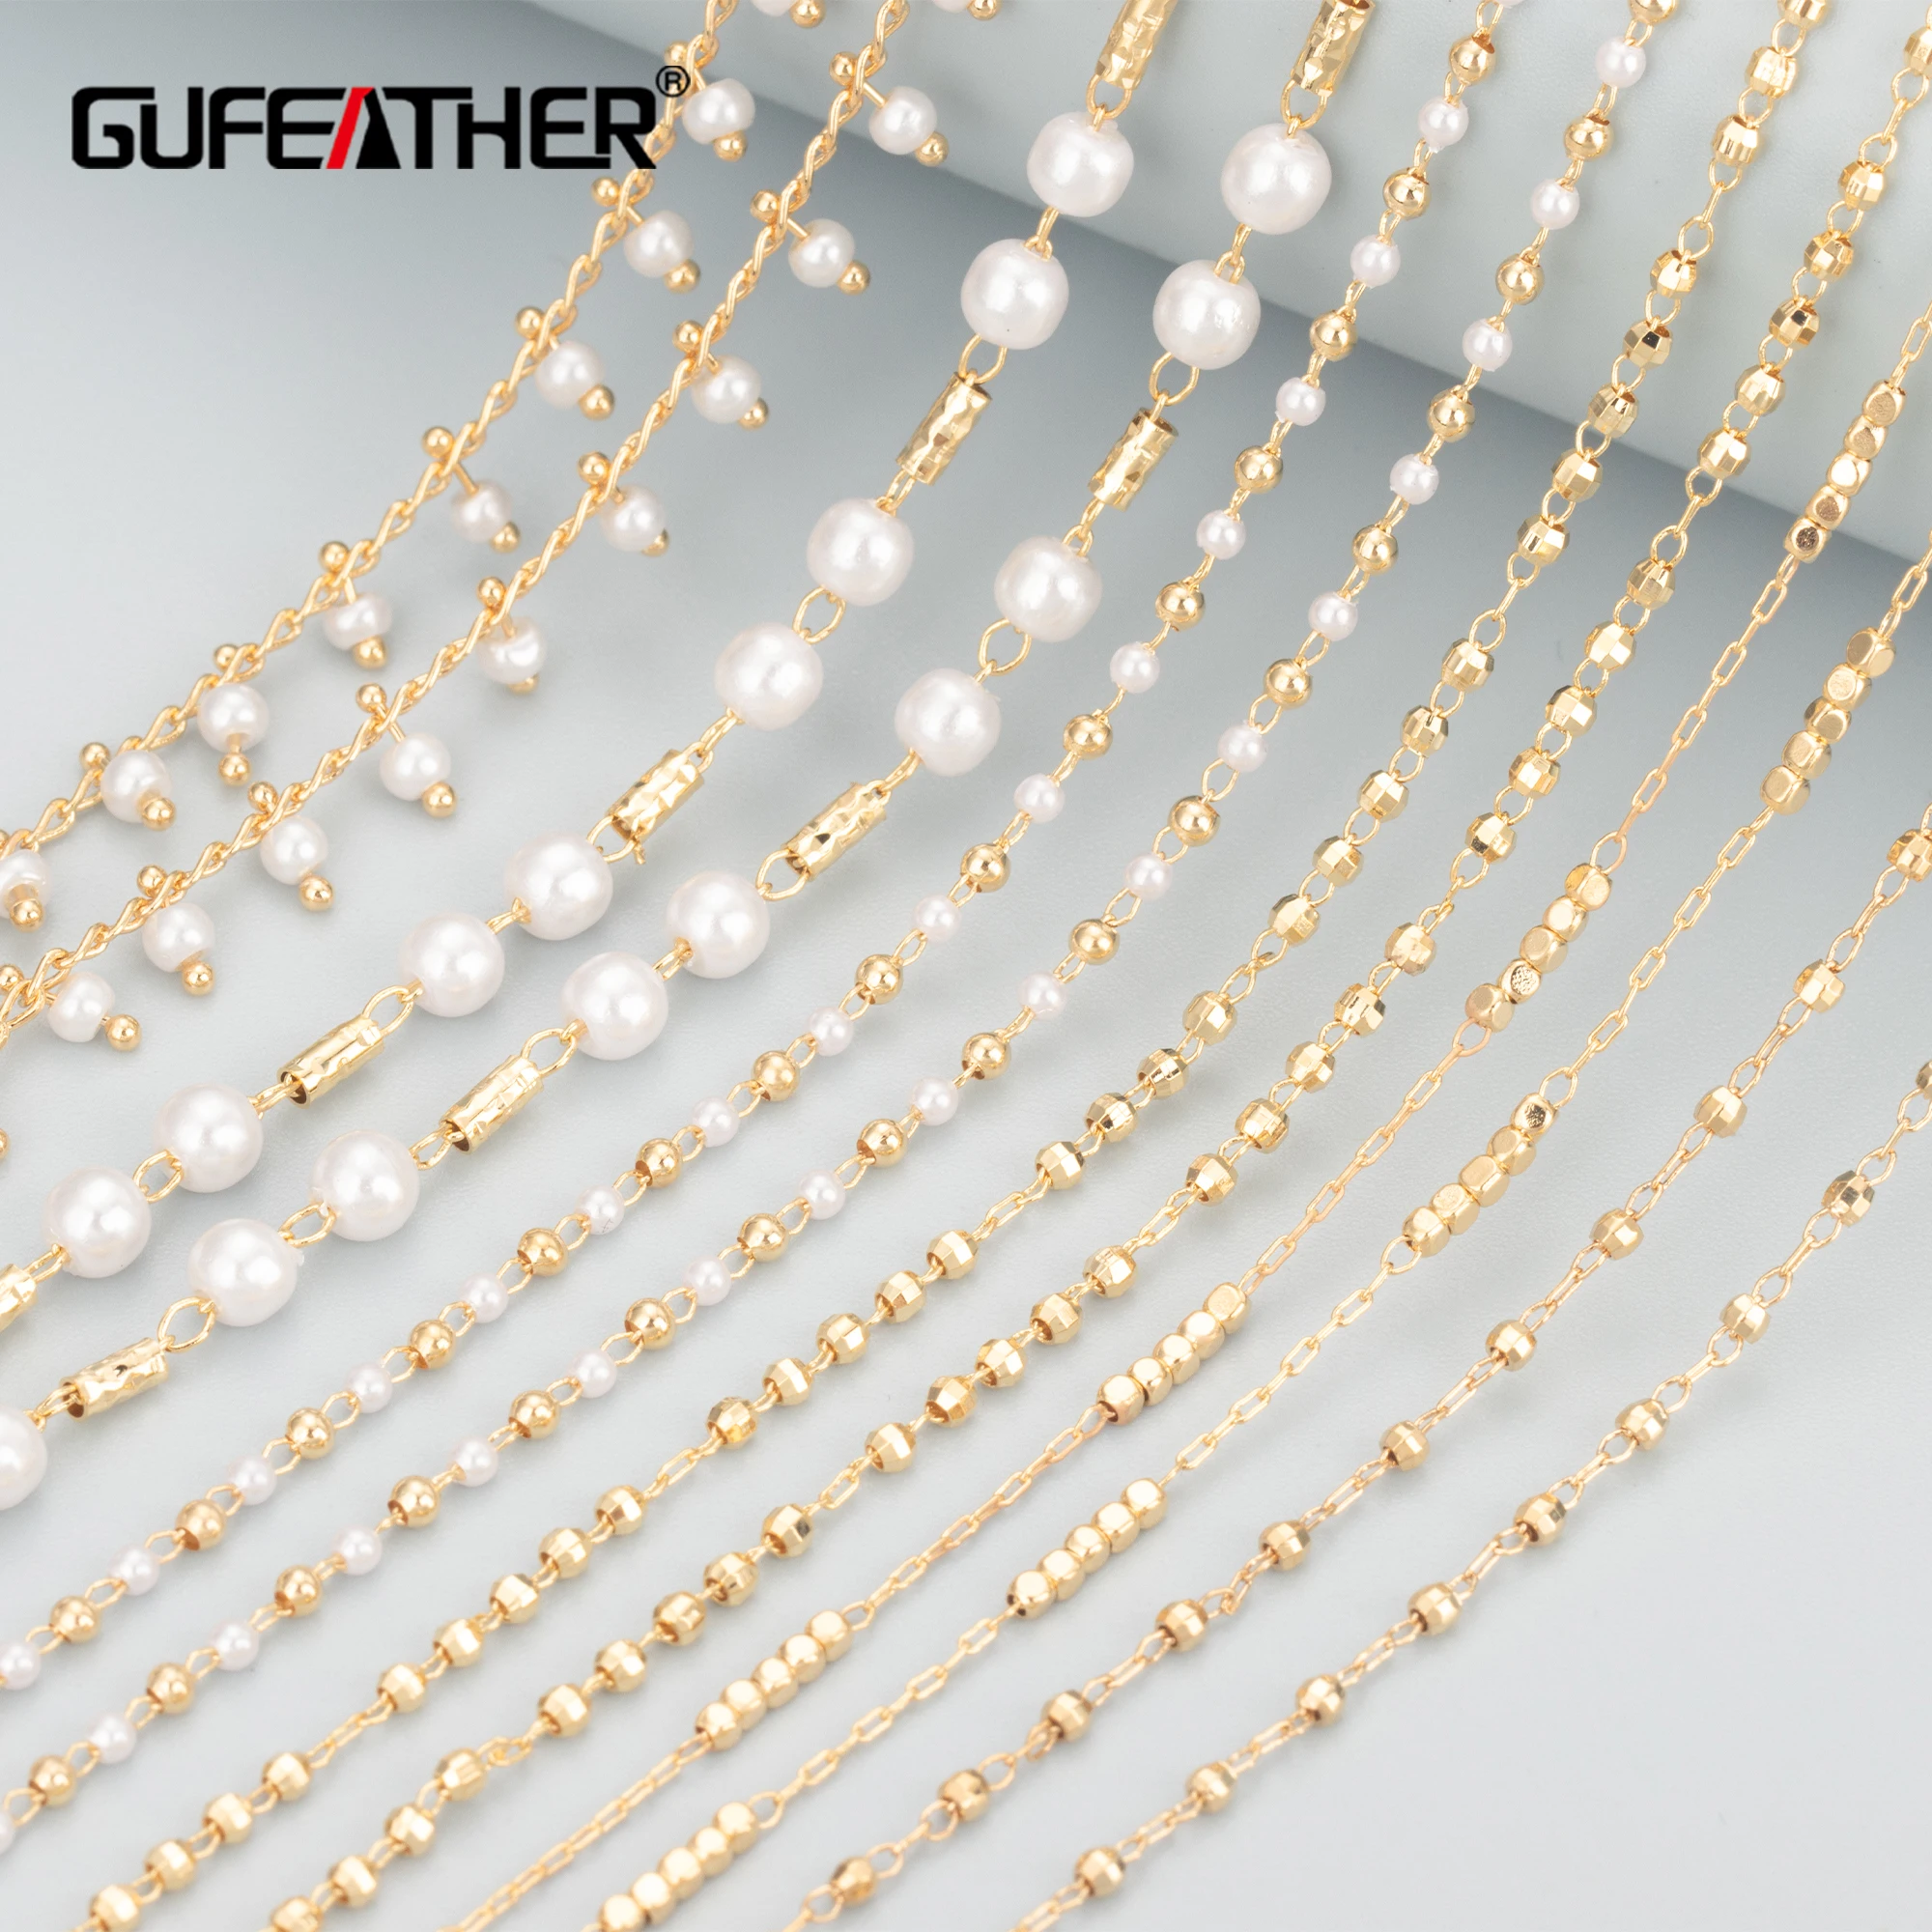 

C79 jewelry accessories18k gold platedcopperpearlpass REACHnickel freediy chain necklace making1m/lot